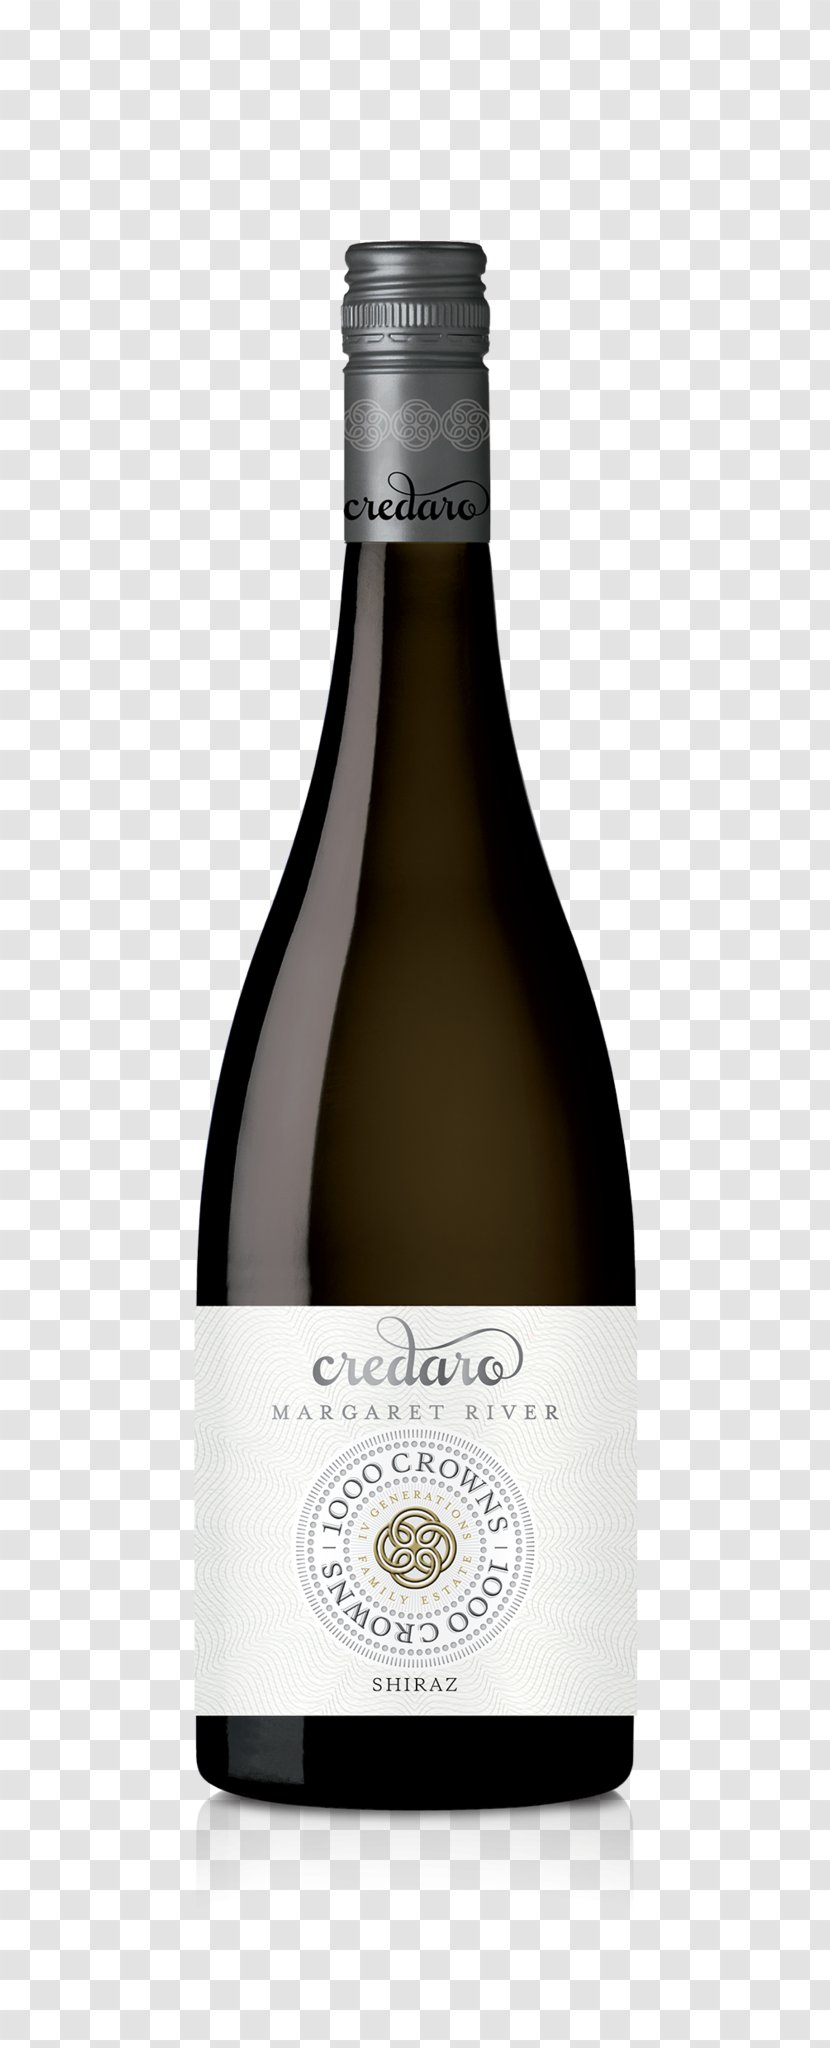 Credaro Wines Cabernet Sauvignon Merlot Shiraz - Winemaker - Peach Blossom Forest Transparent PNG